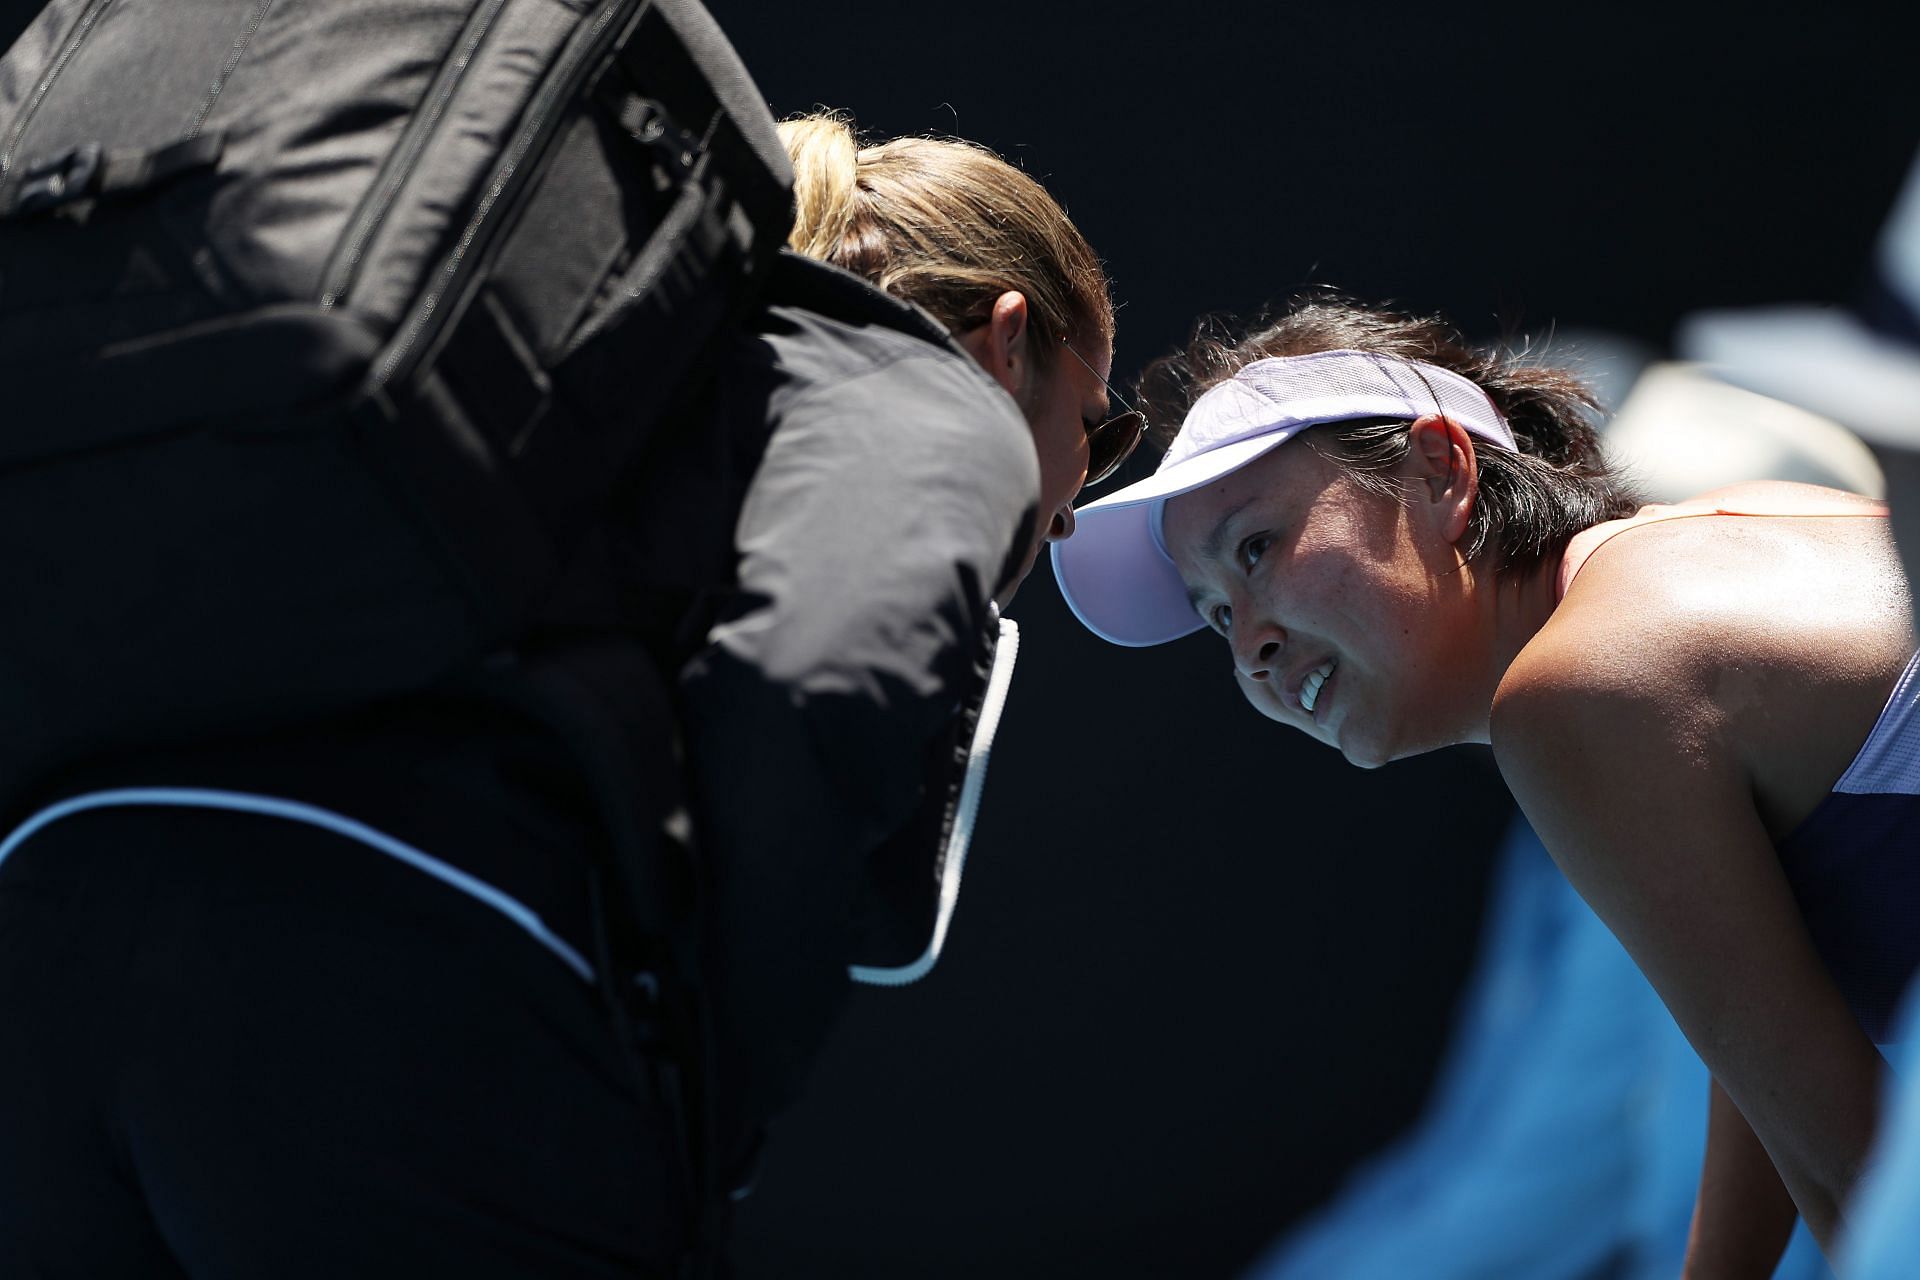 Penh Shuai at the 2020 Australian Open.